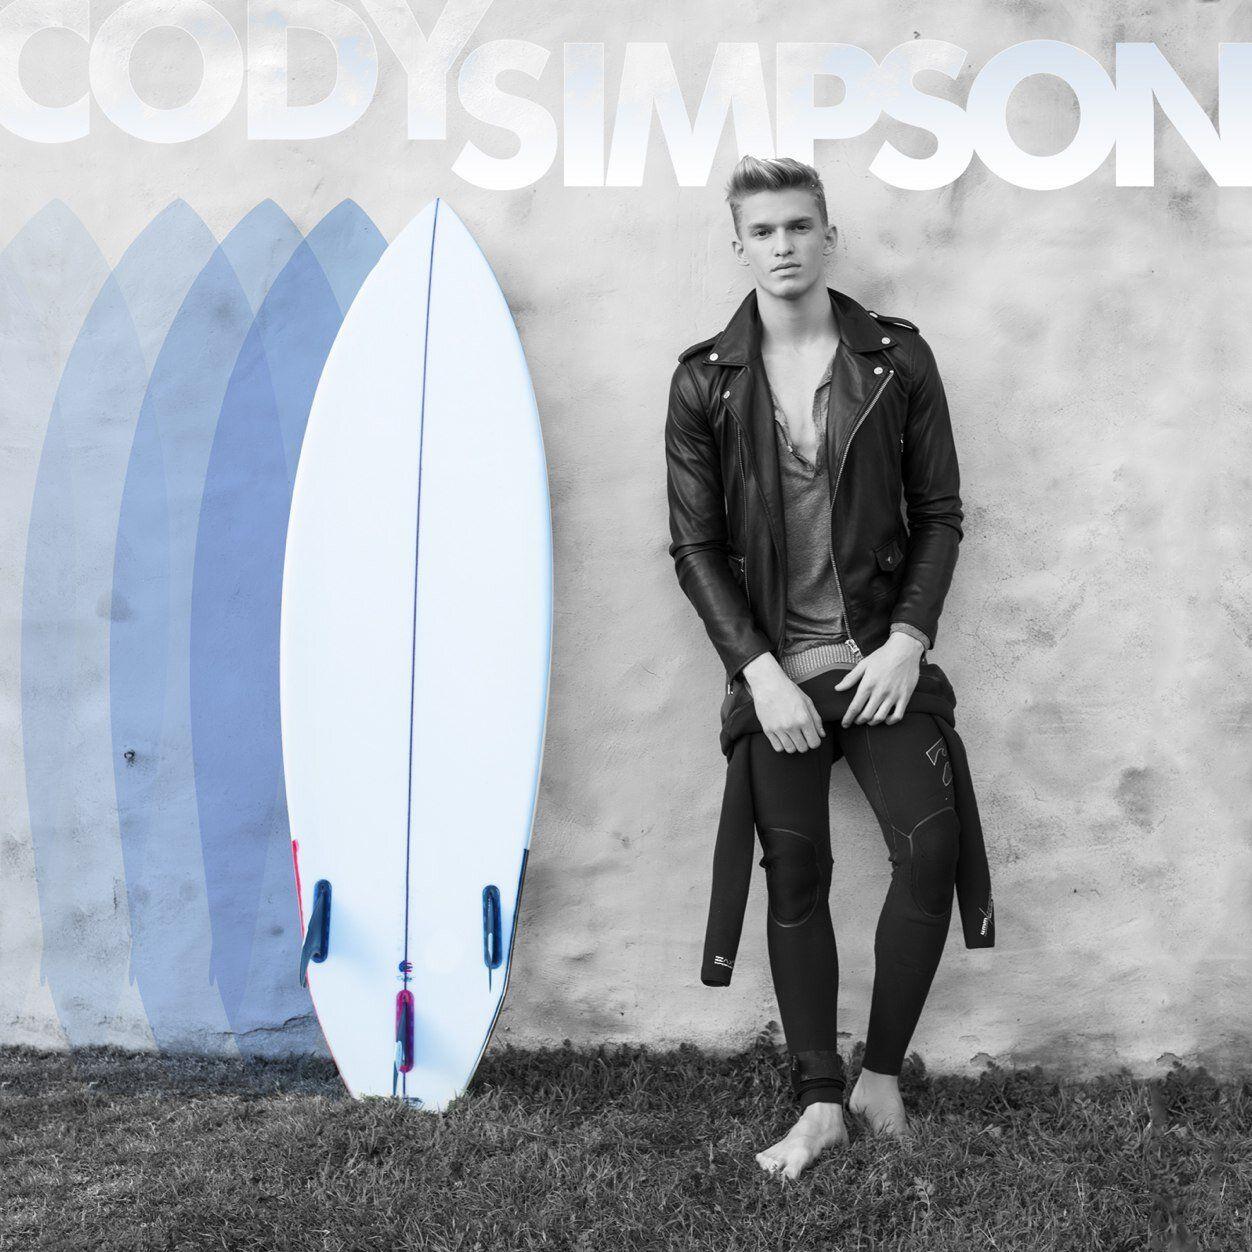 SB Projects Cody Simpson Single 'Surfboard'